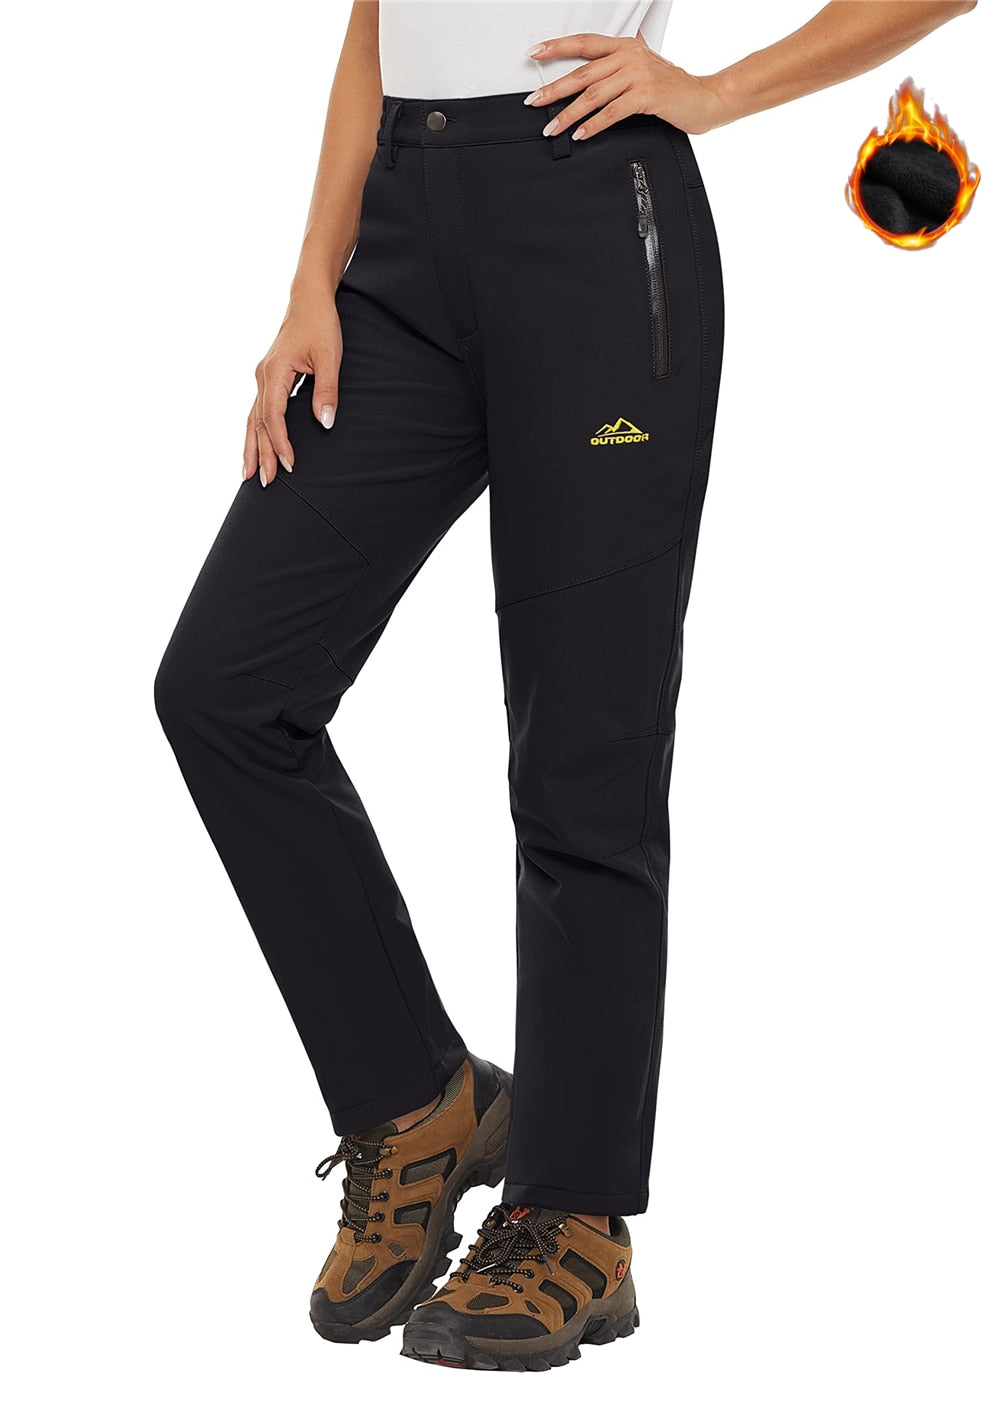 Team Rocket HQ Collection Black Fitted Fleece Jogger Pants  Women   Pokémon Center Official Site